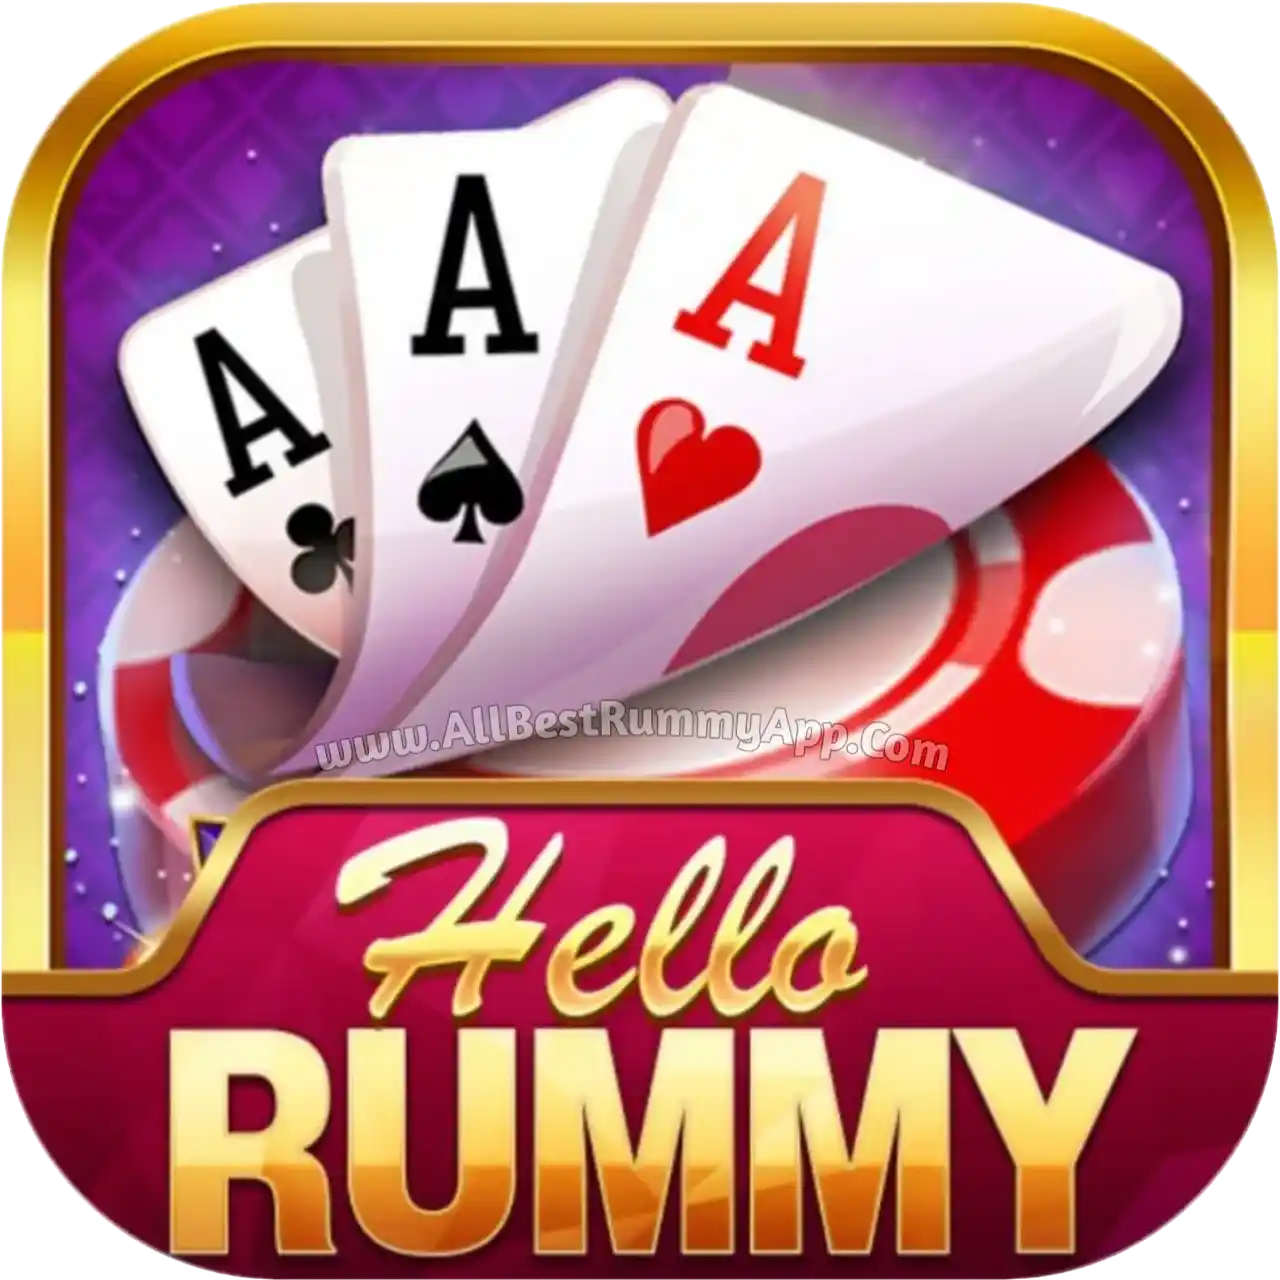 Hello Rummy - All Best Rummy App